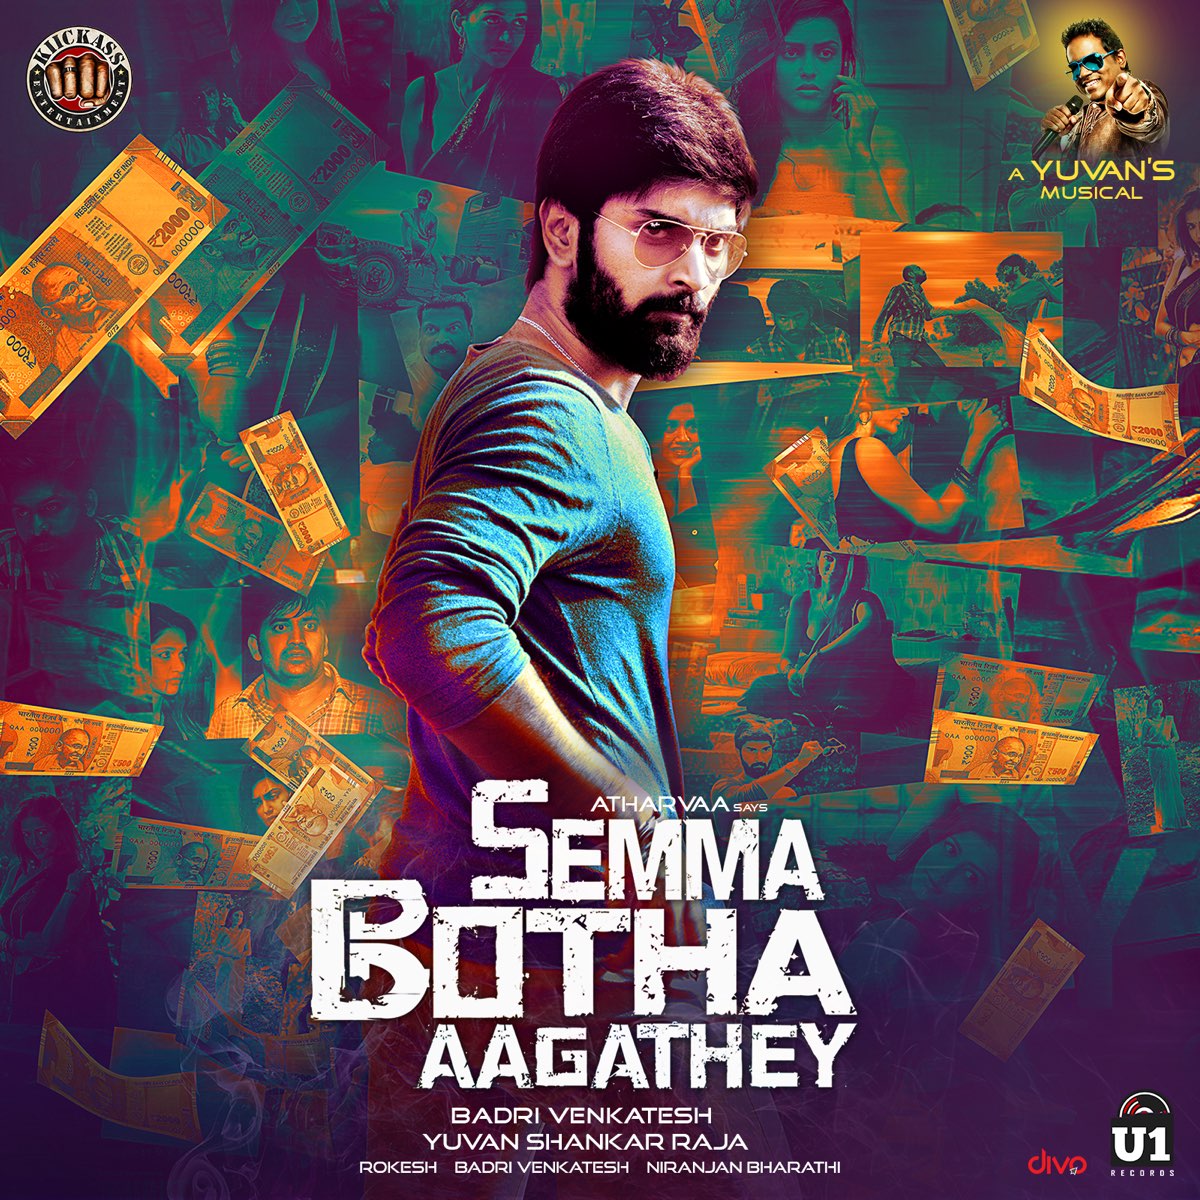 Semma Botha gathey Original Motion Picture Soundtrack By Yuvan Shankar Raja On Apple Music